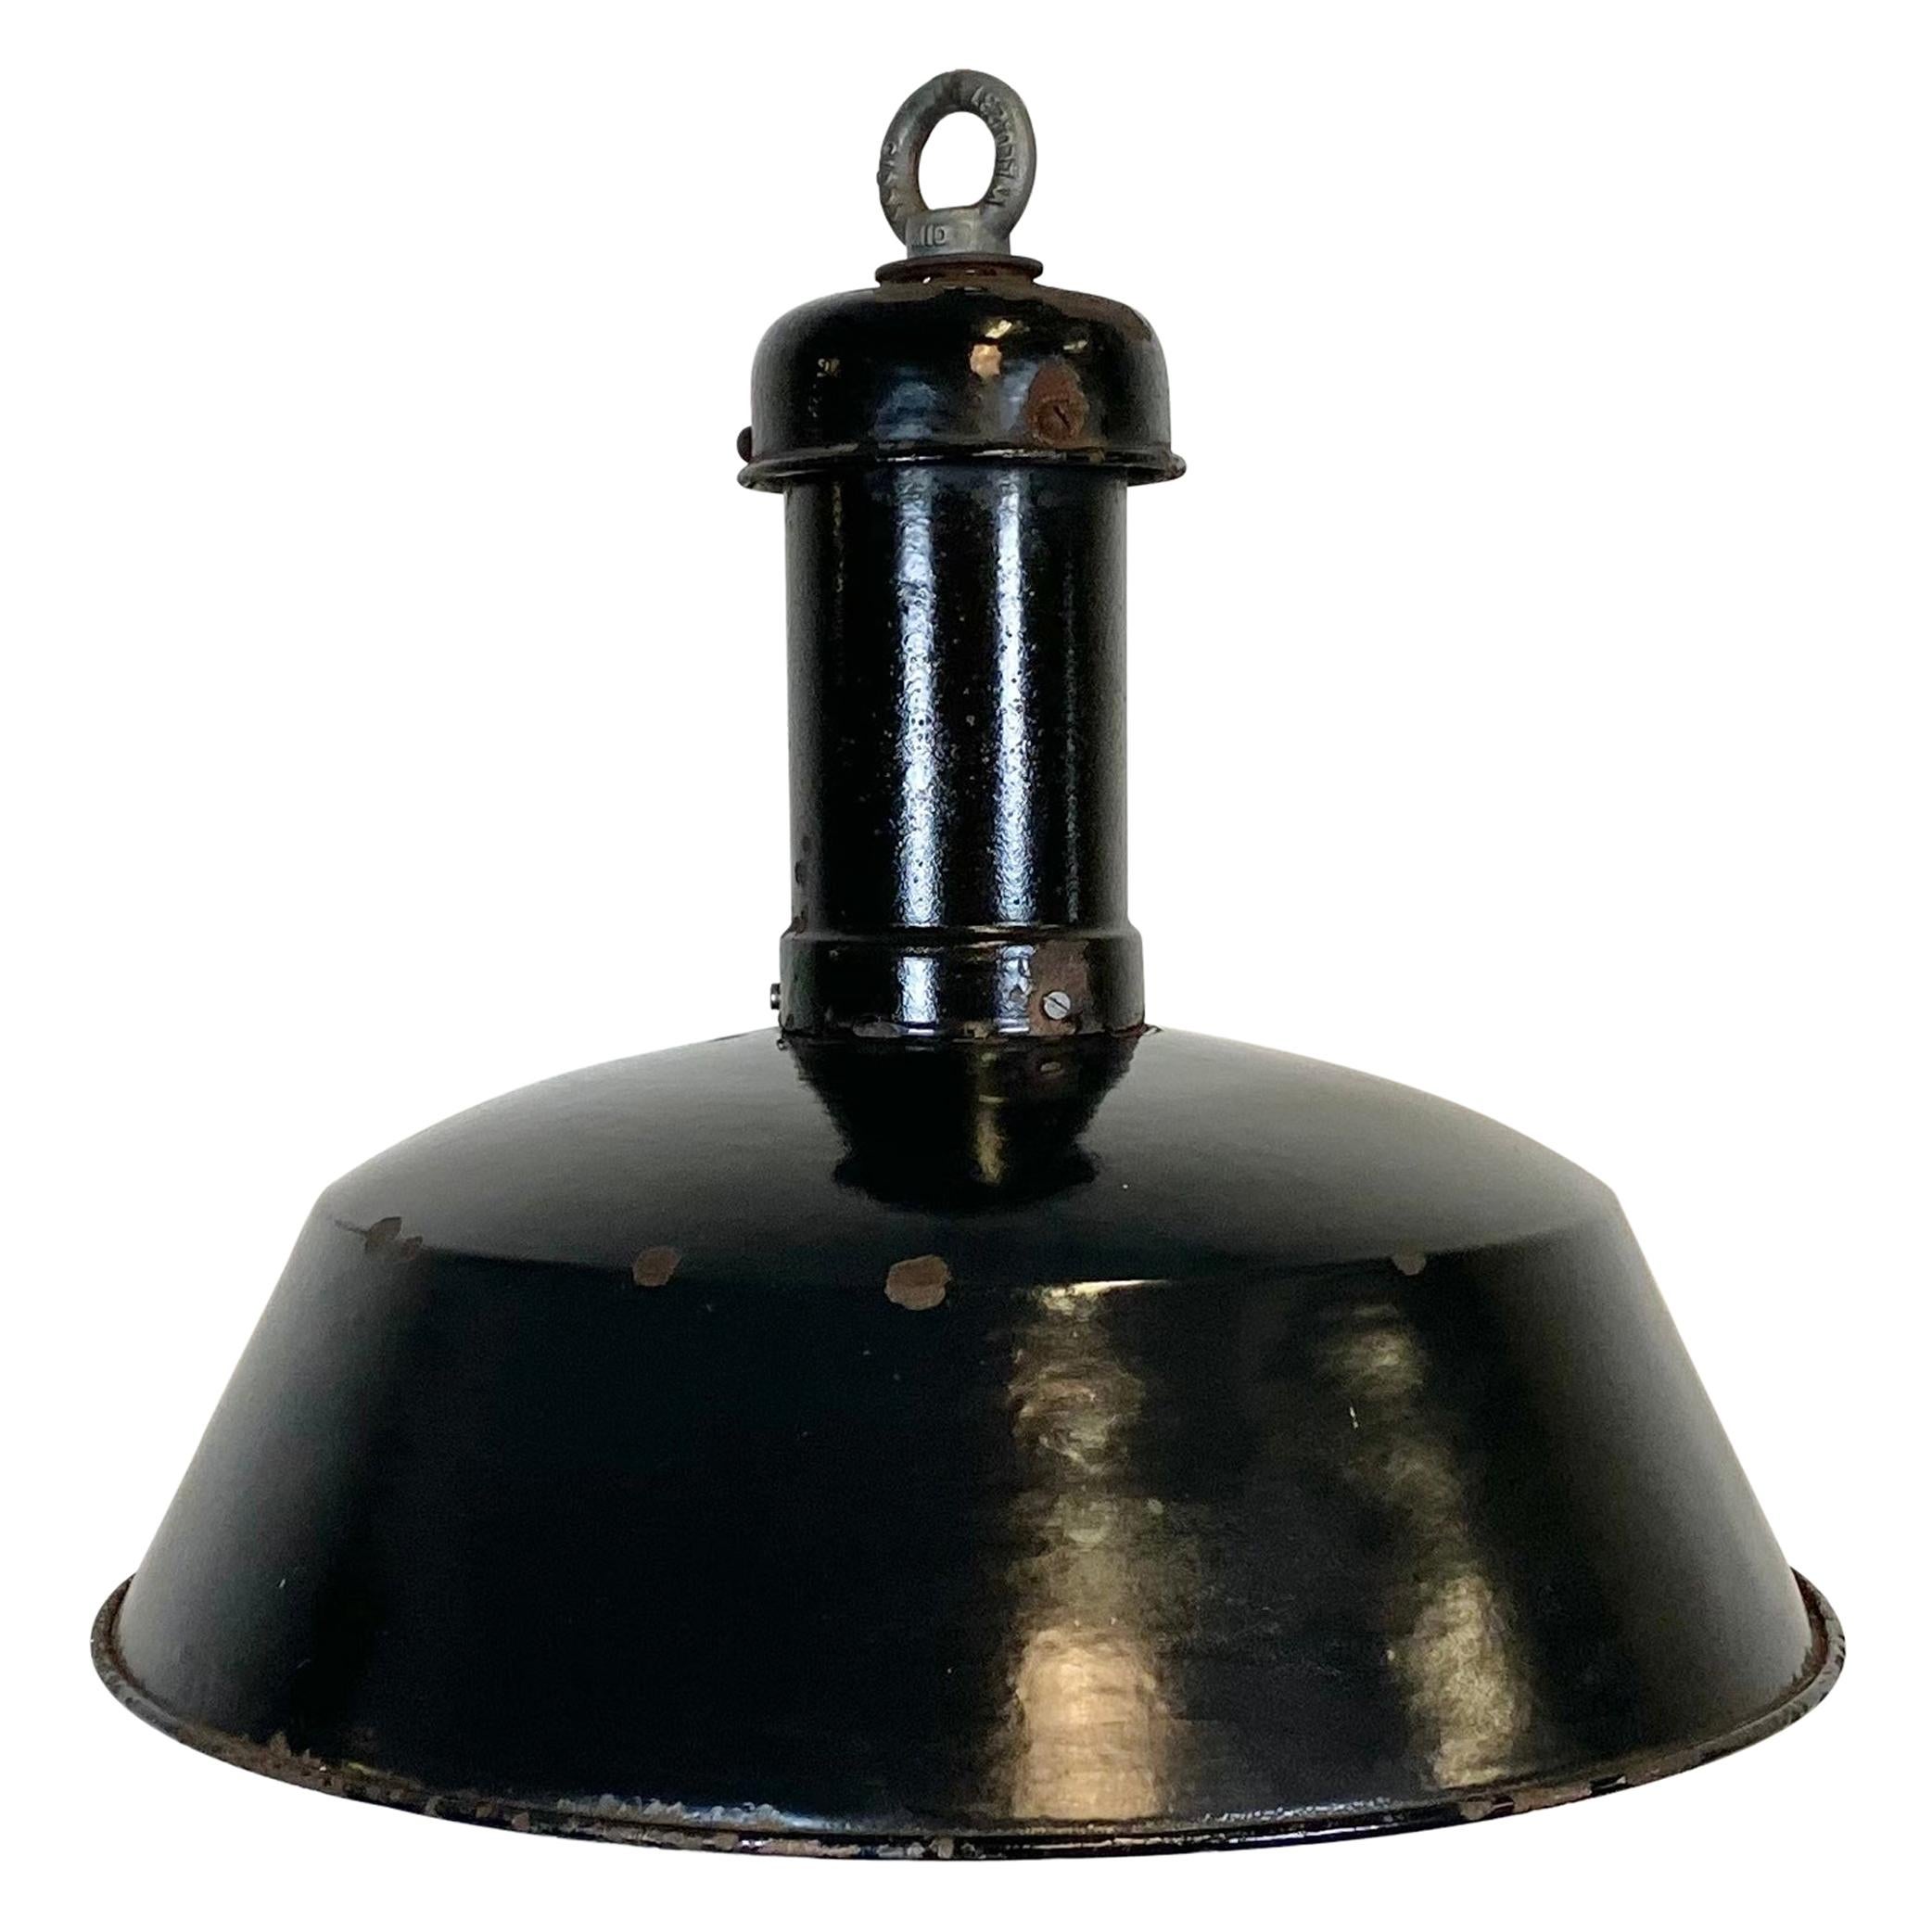 Vintage Black Enamel Industrial Pendant Light, 1930s